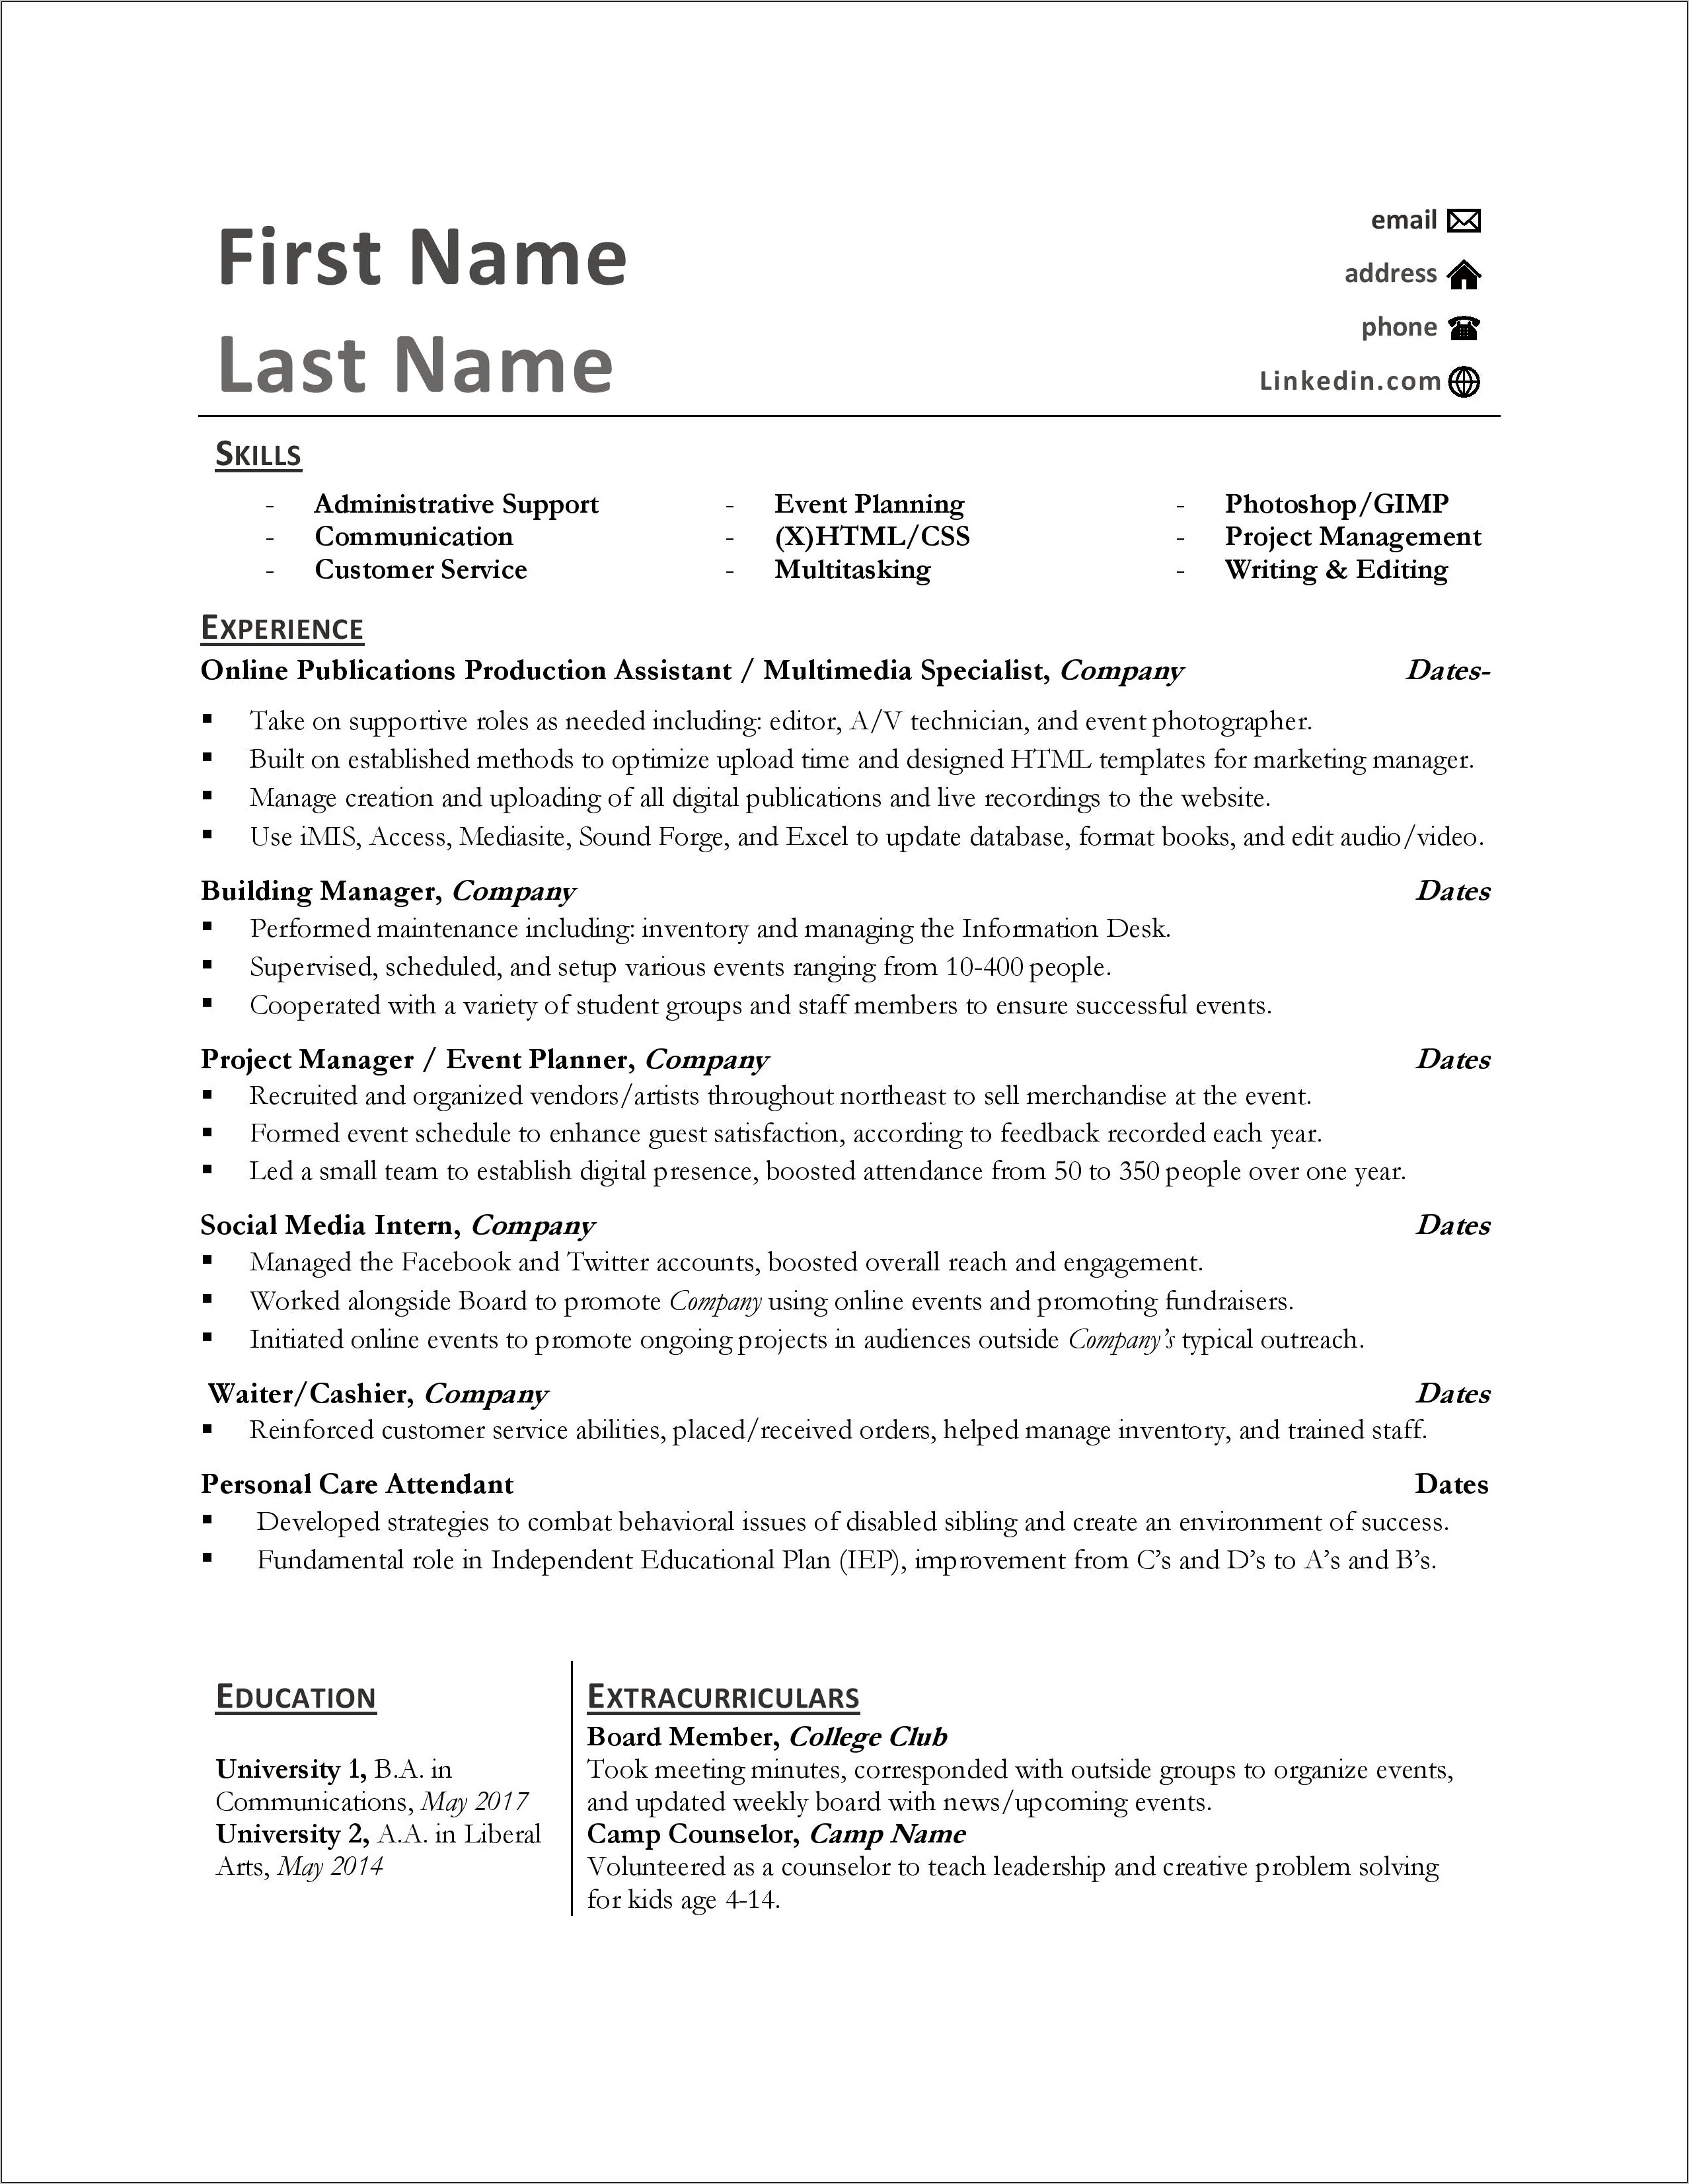 Job Title Change Same Responsibilities Resume